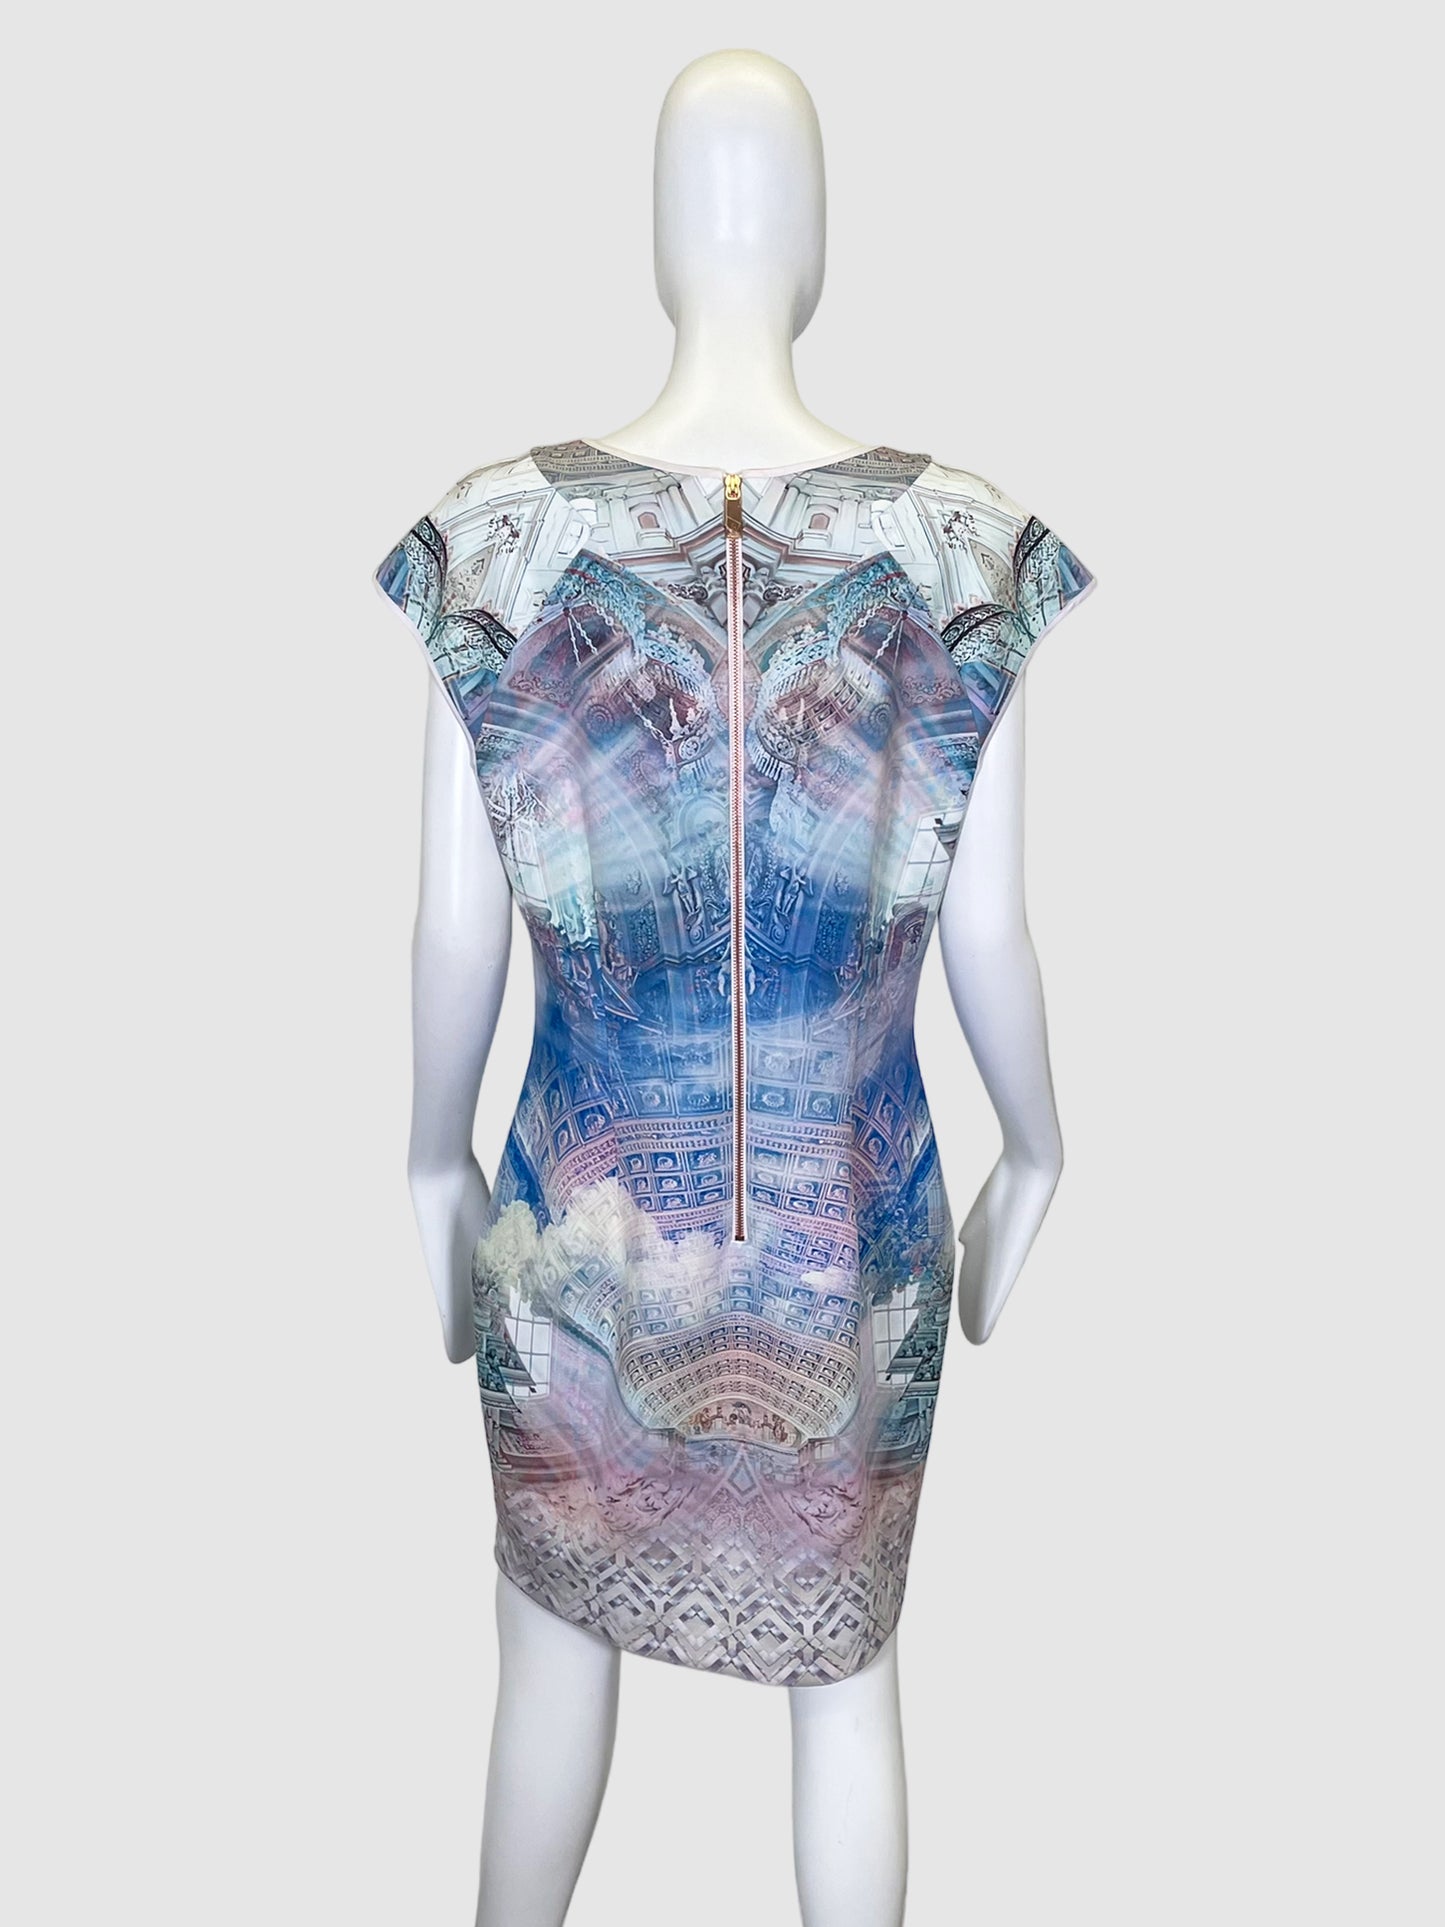 Ted Baker Printed Sleeveless Dress - Size 5(XL)